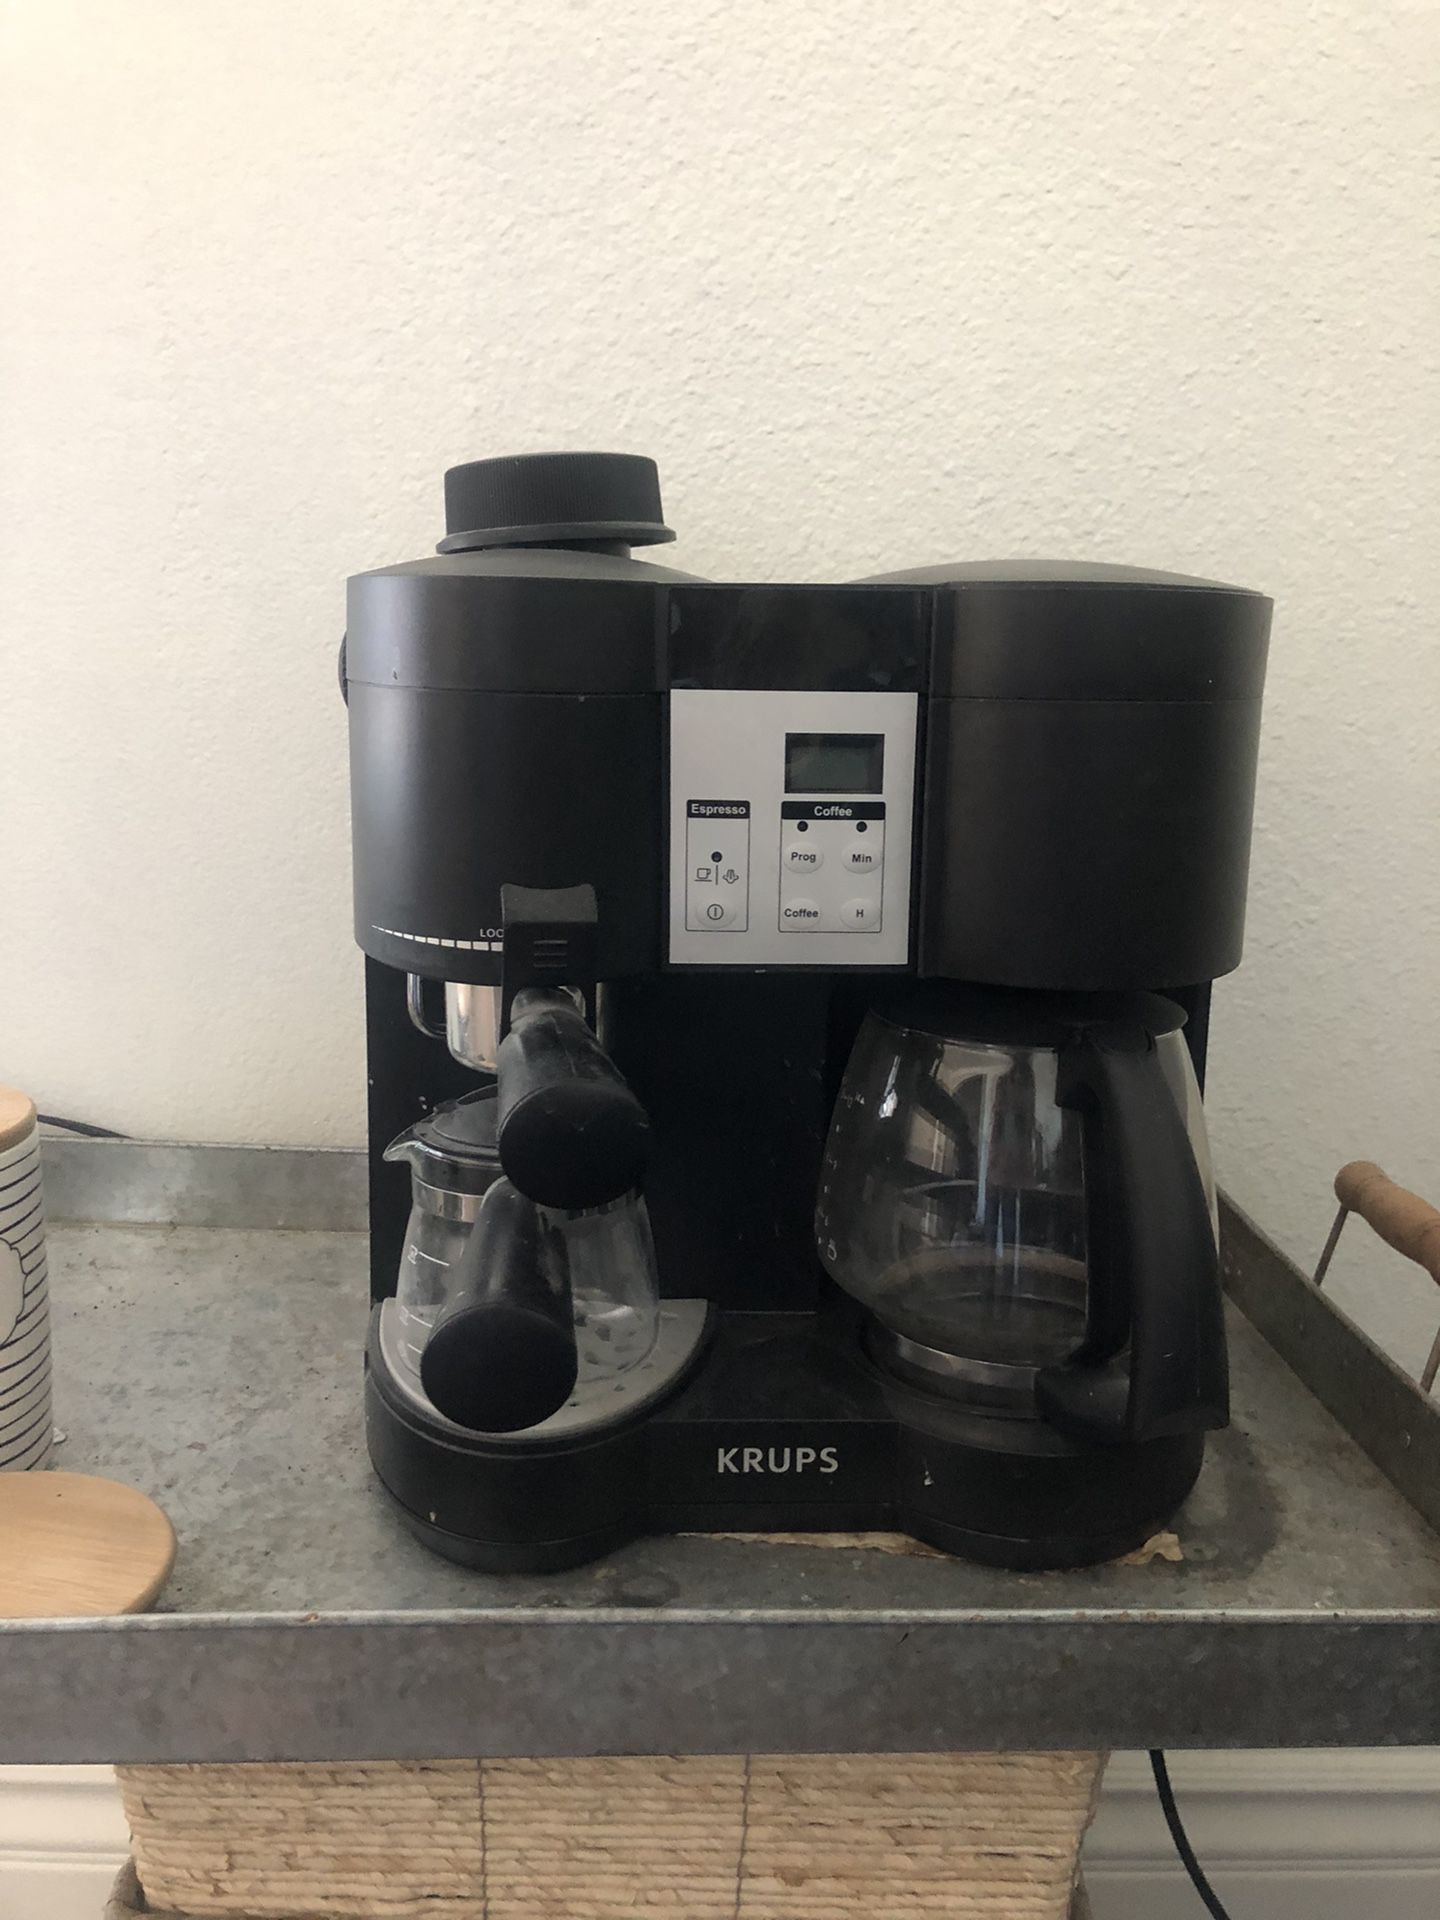 Krups Coffee and espresso maker